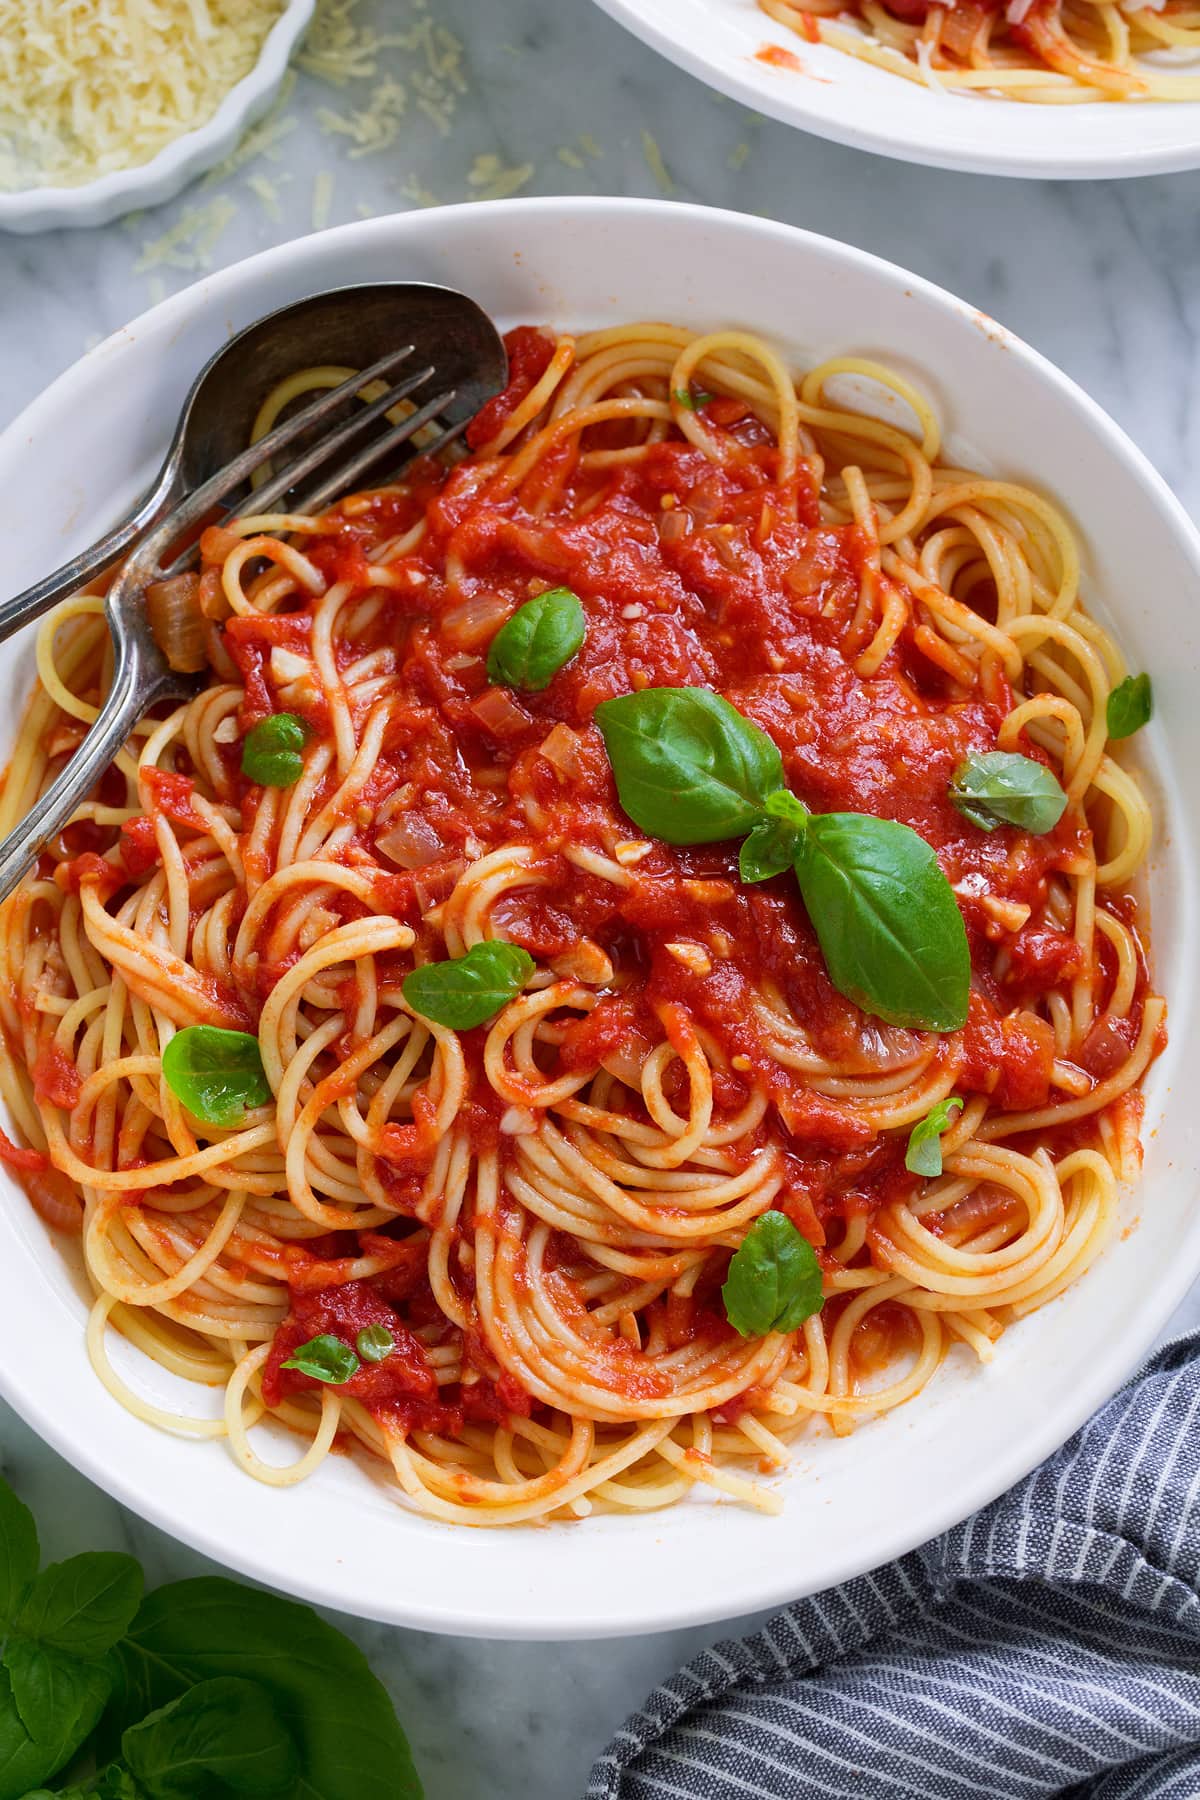 Nanaimo Alexandra S Bistro Spaghetti With Marinara Sauce Canuck Eats